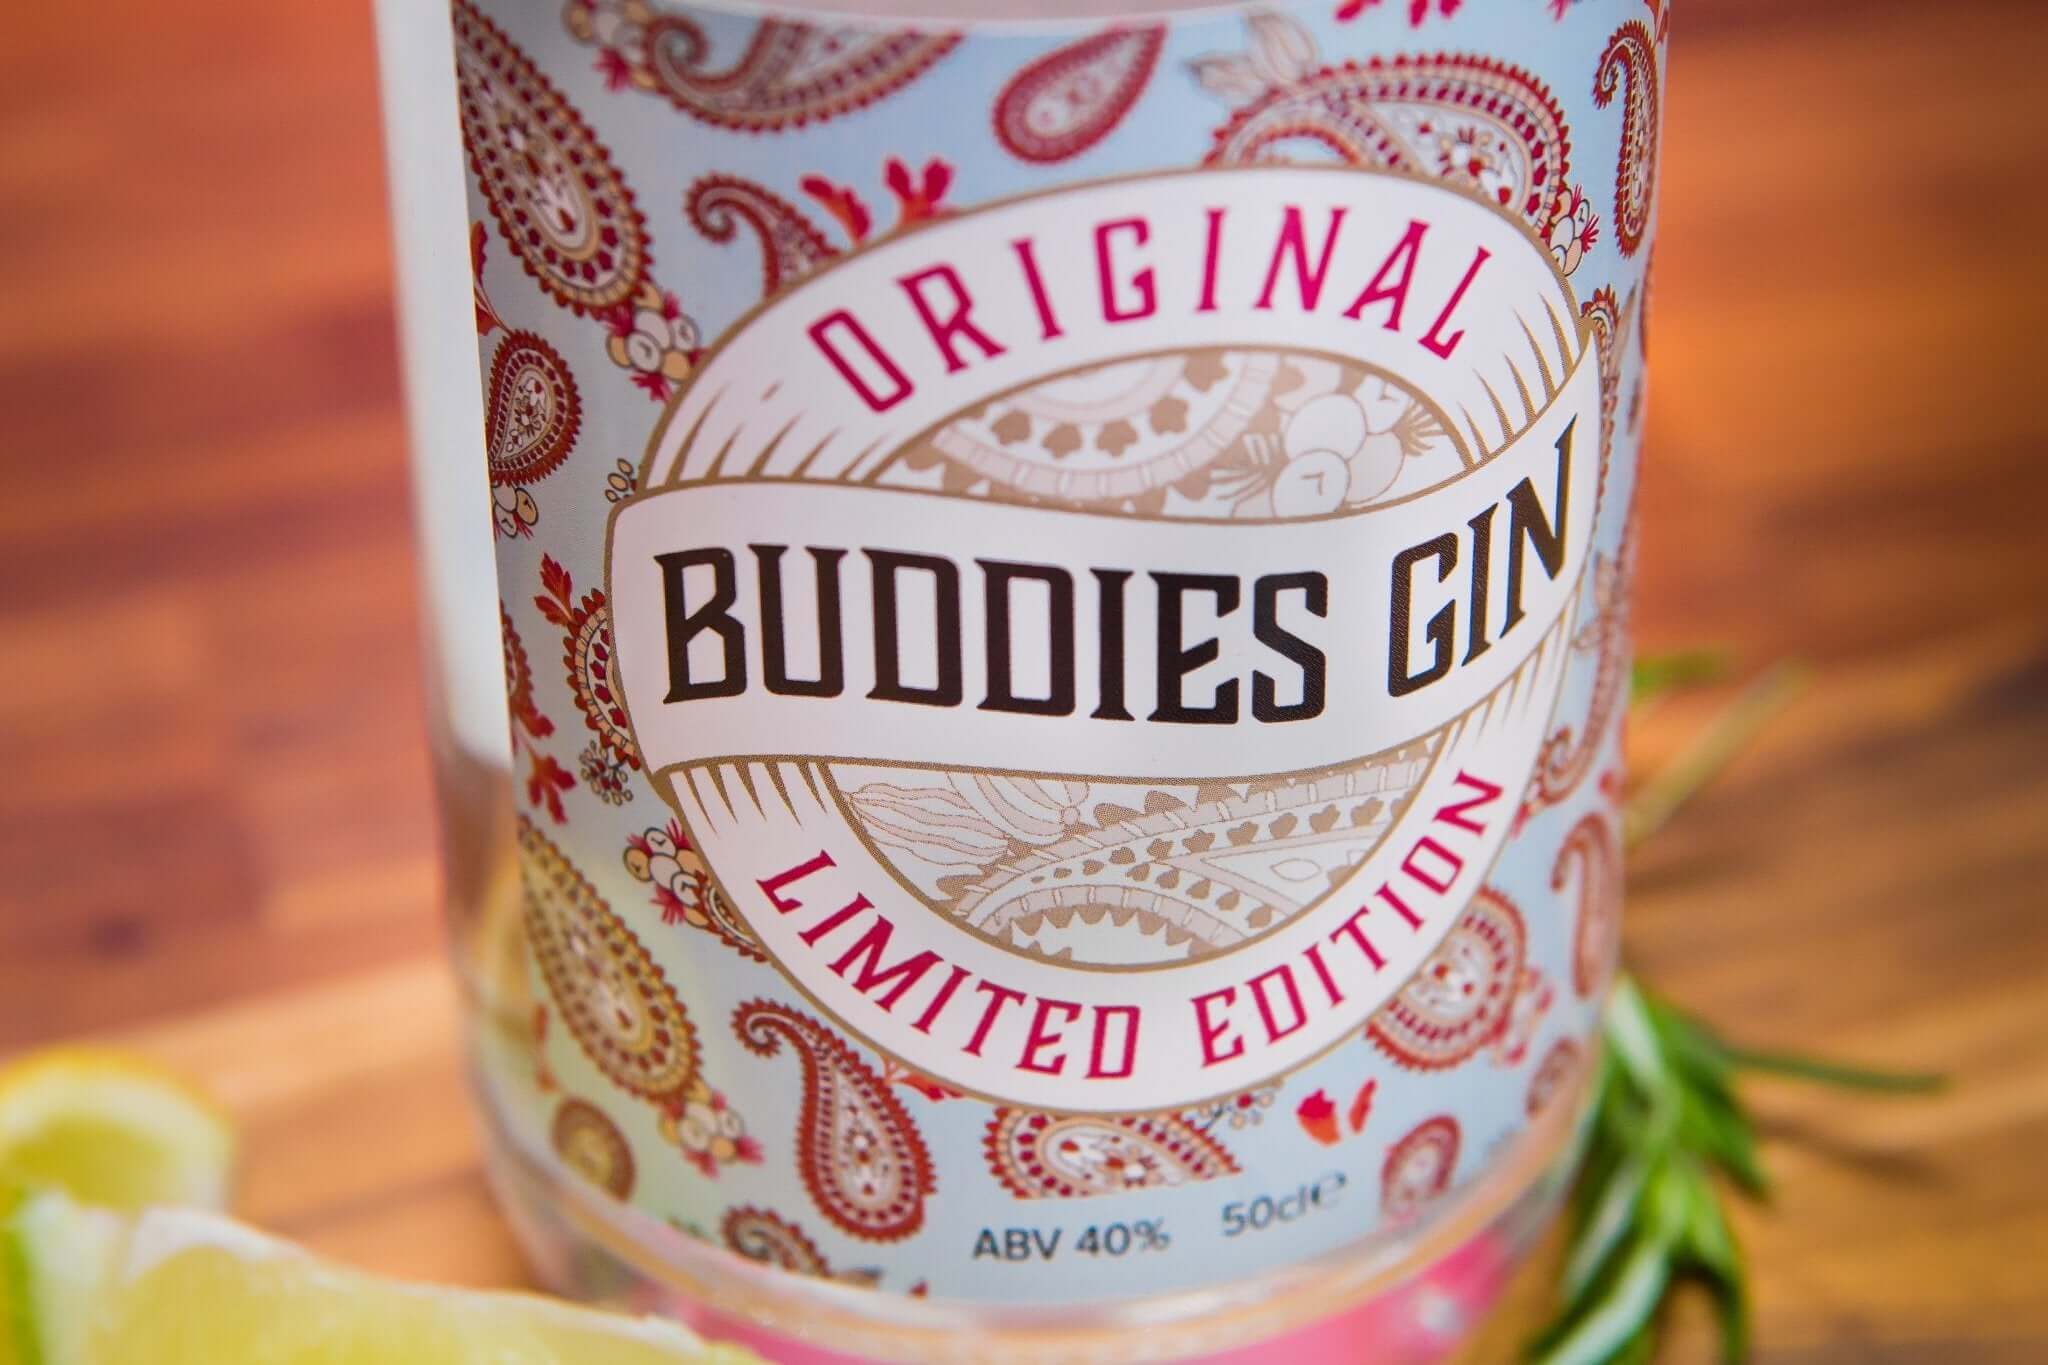 Limited Edition 500ml Original Buddies Gin - Buddies Gin